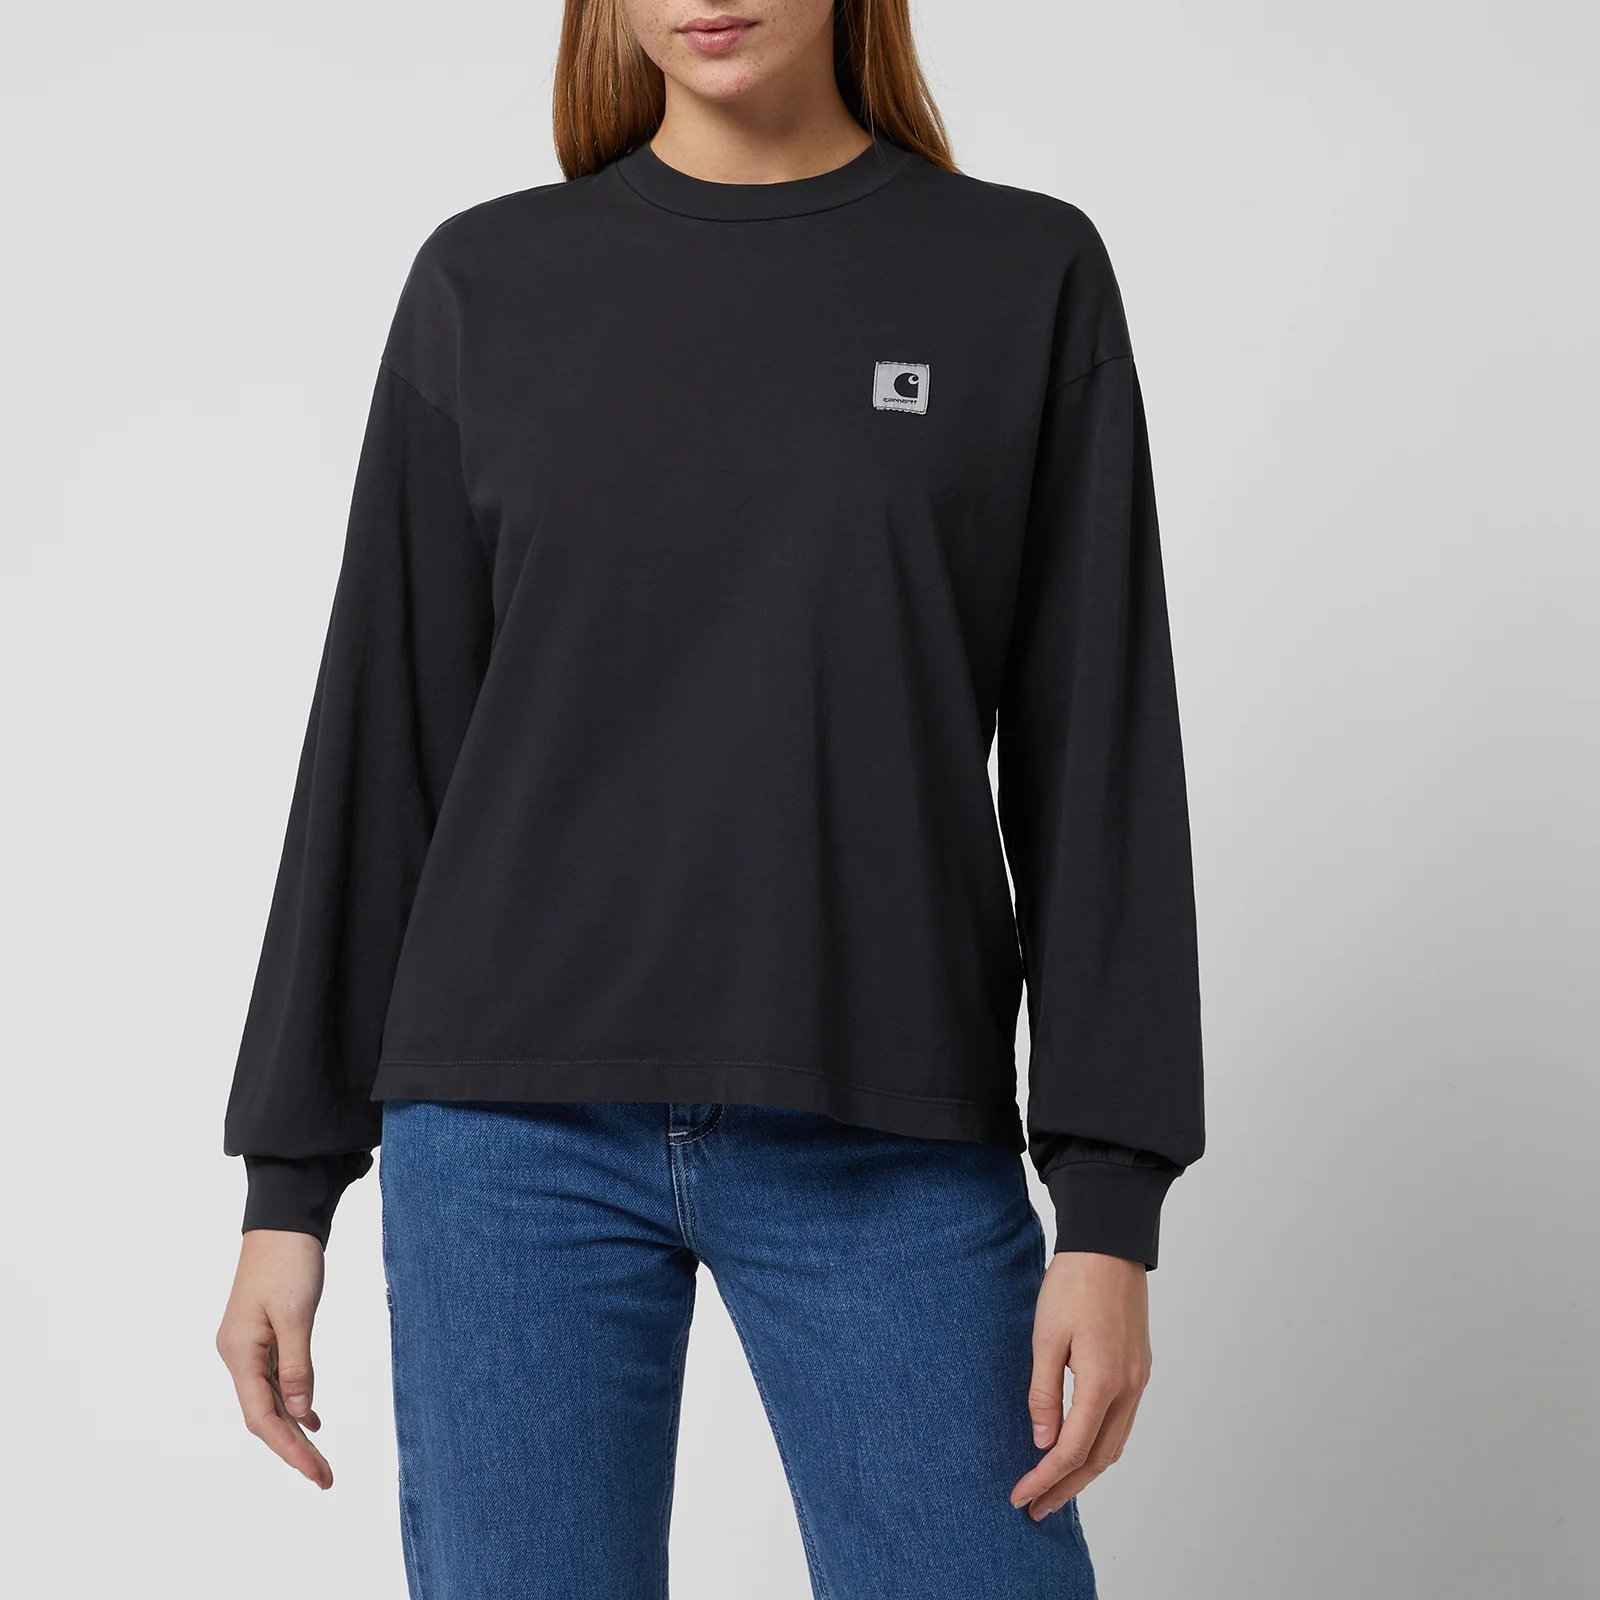 Carhartt WIP Women's Long Sleeve Nelson T-Shirt - Black Image 1